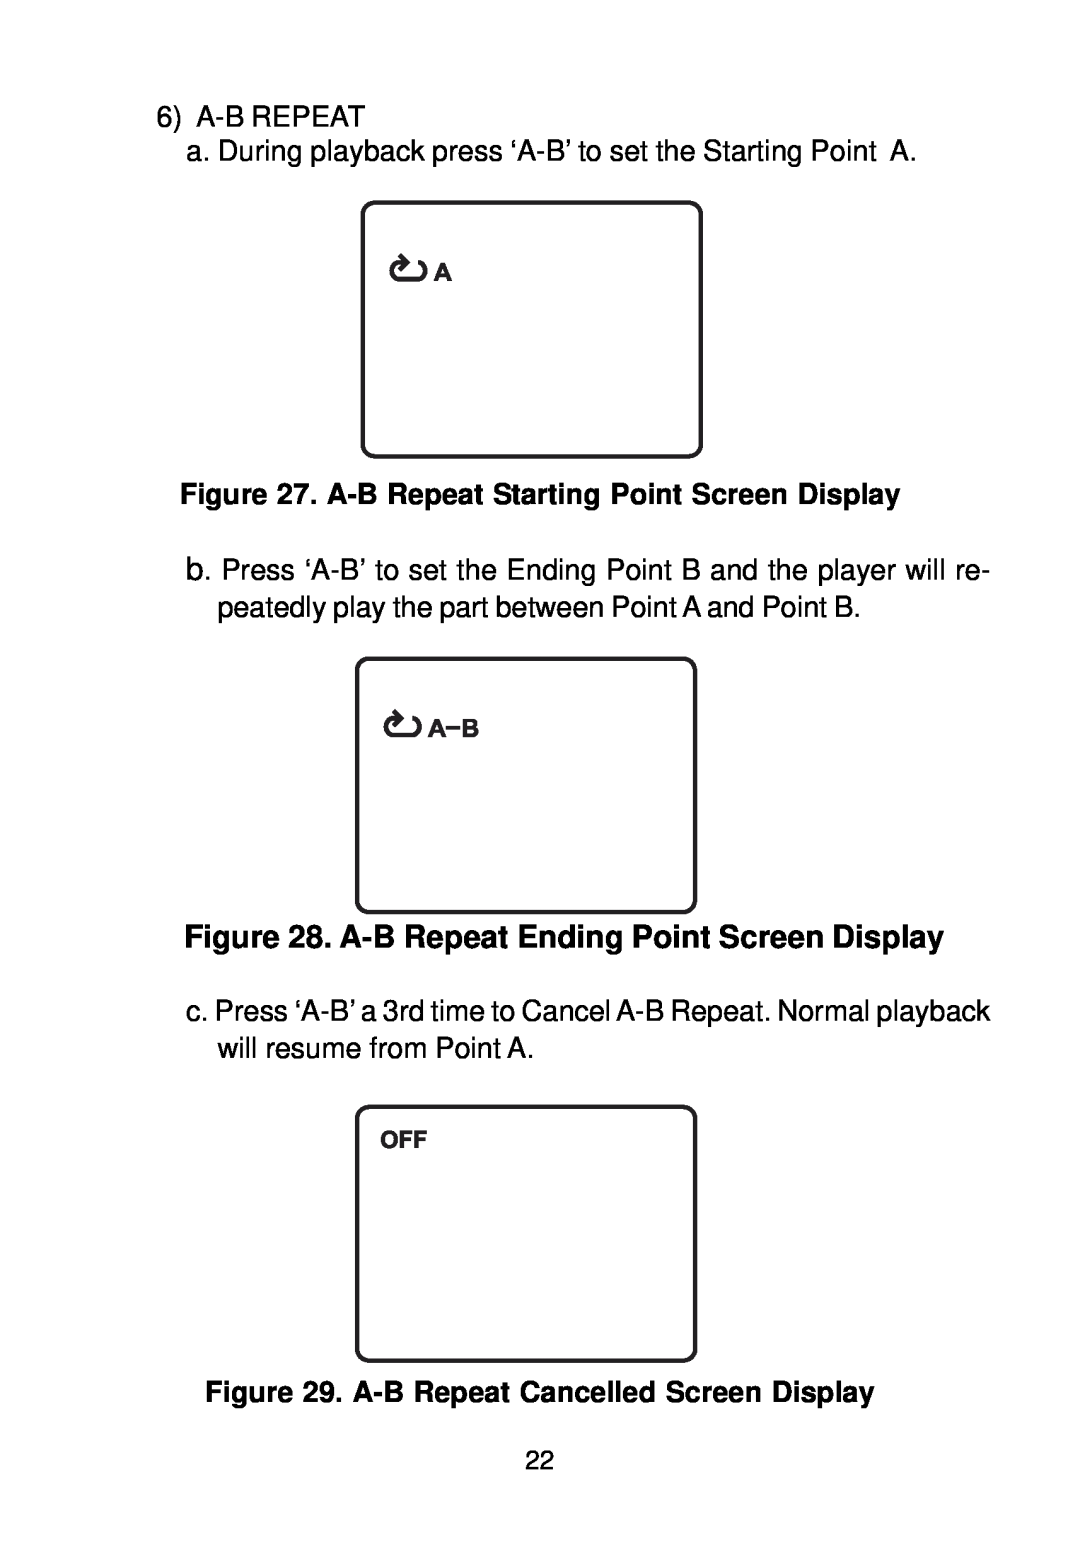 Audiovox VBP58 manual A-B Repeat Ending Point Screen Display, A-B Repeat Starting Point Screen Display 